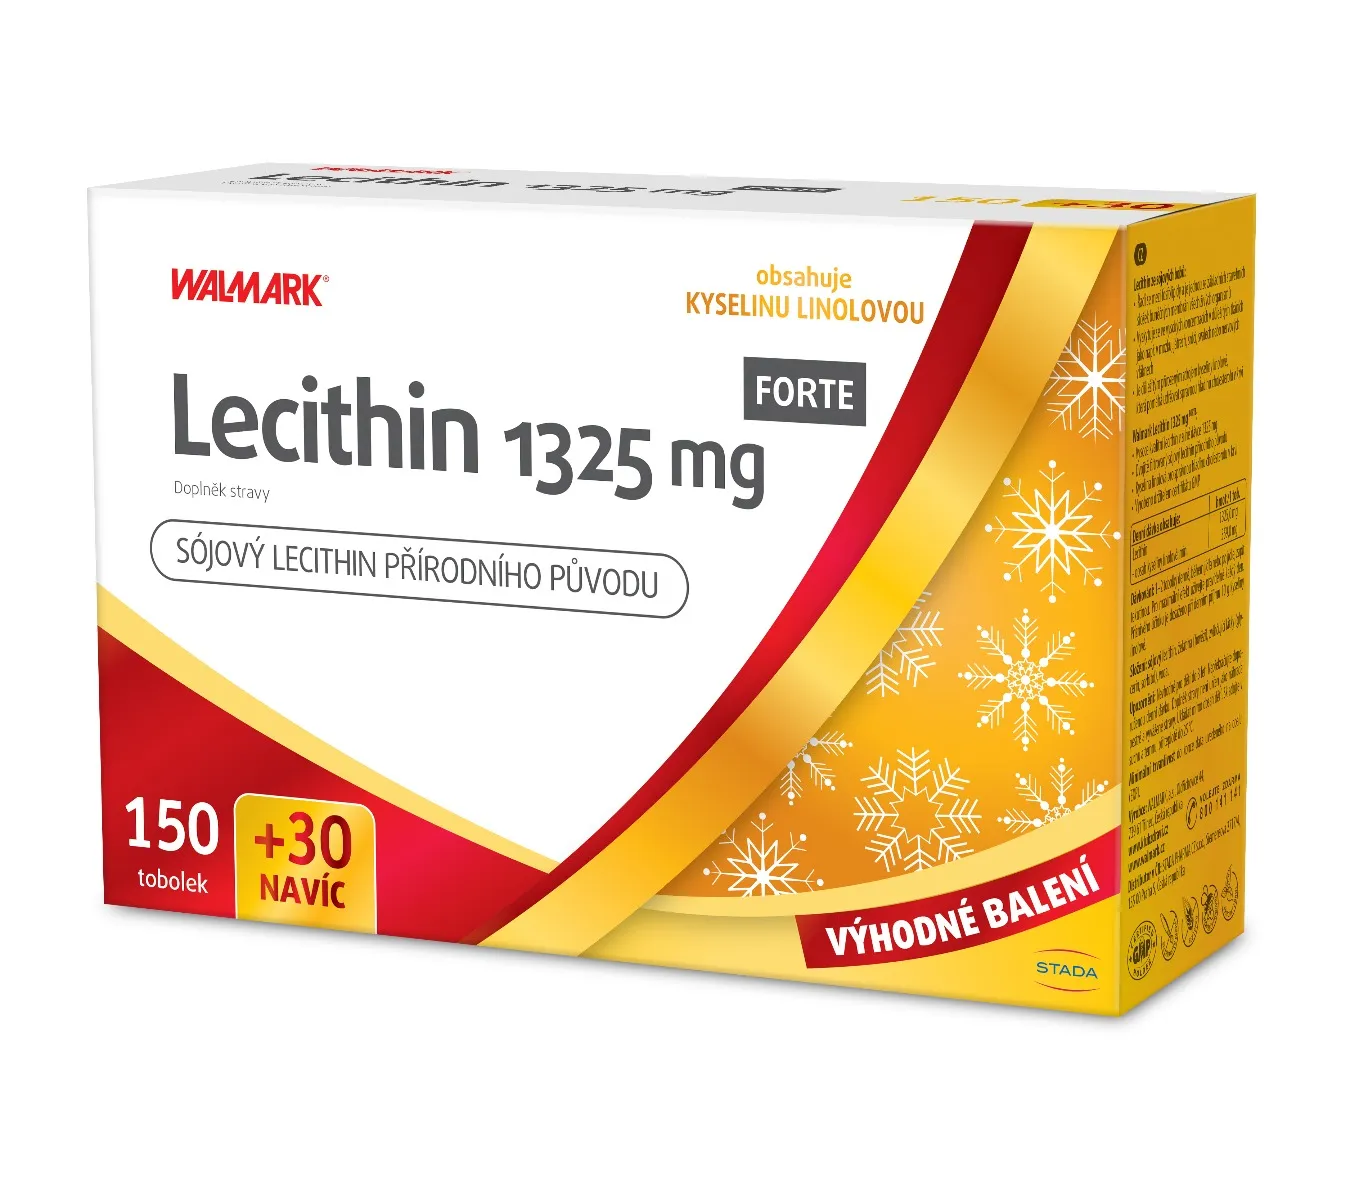 Walmark Lecithin Forte 1325 mg